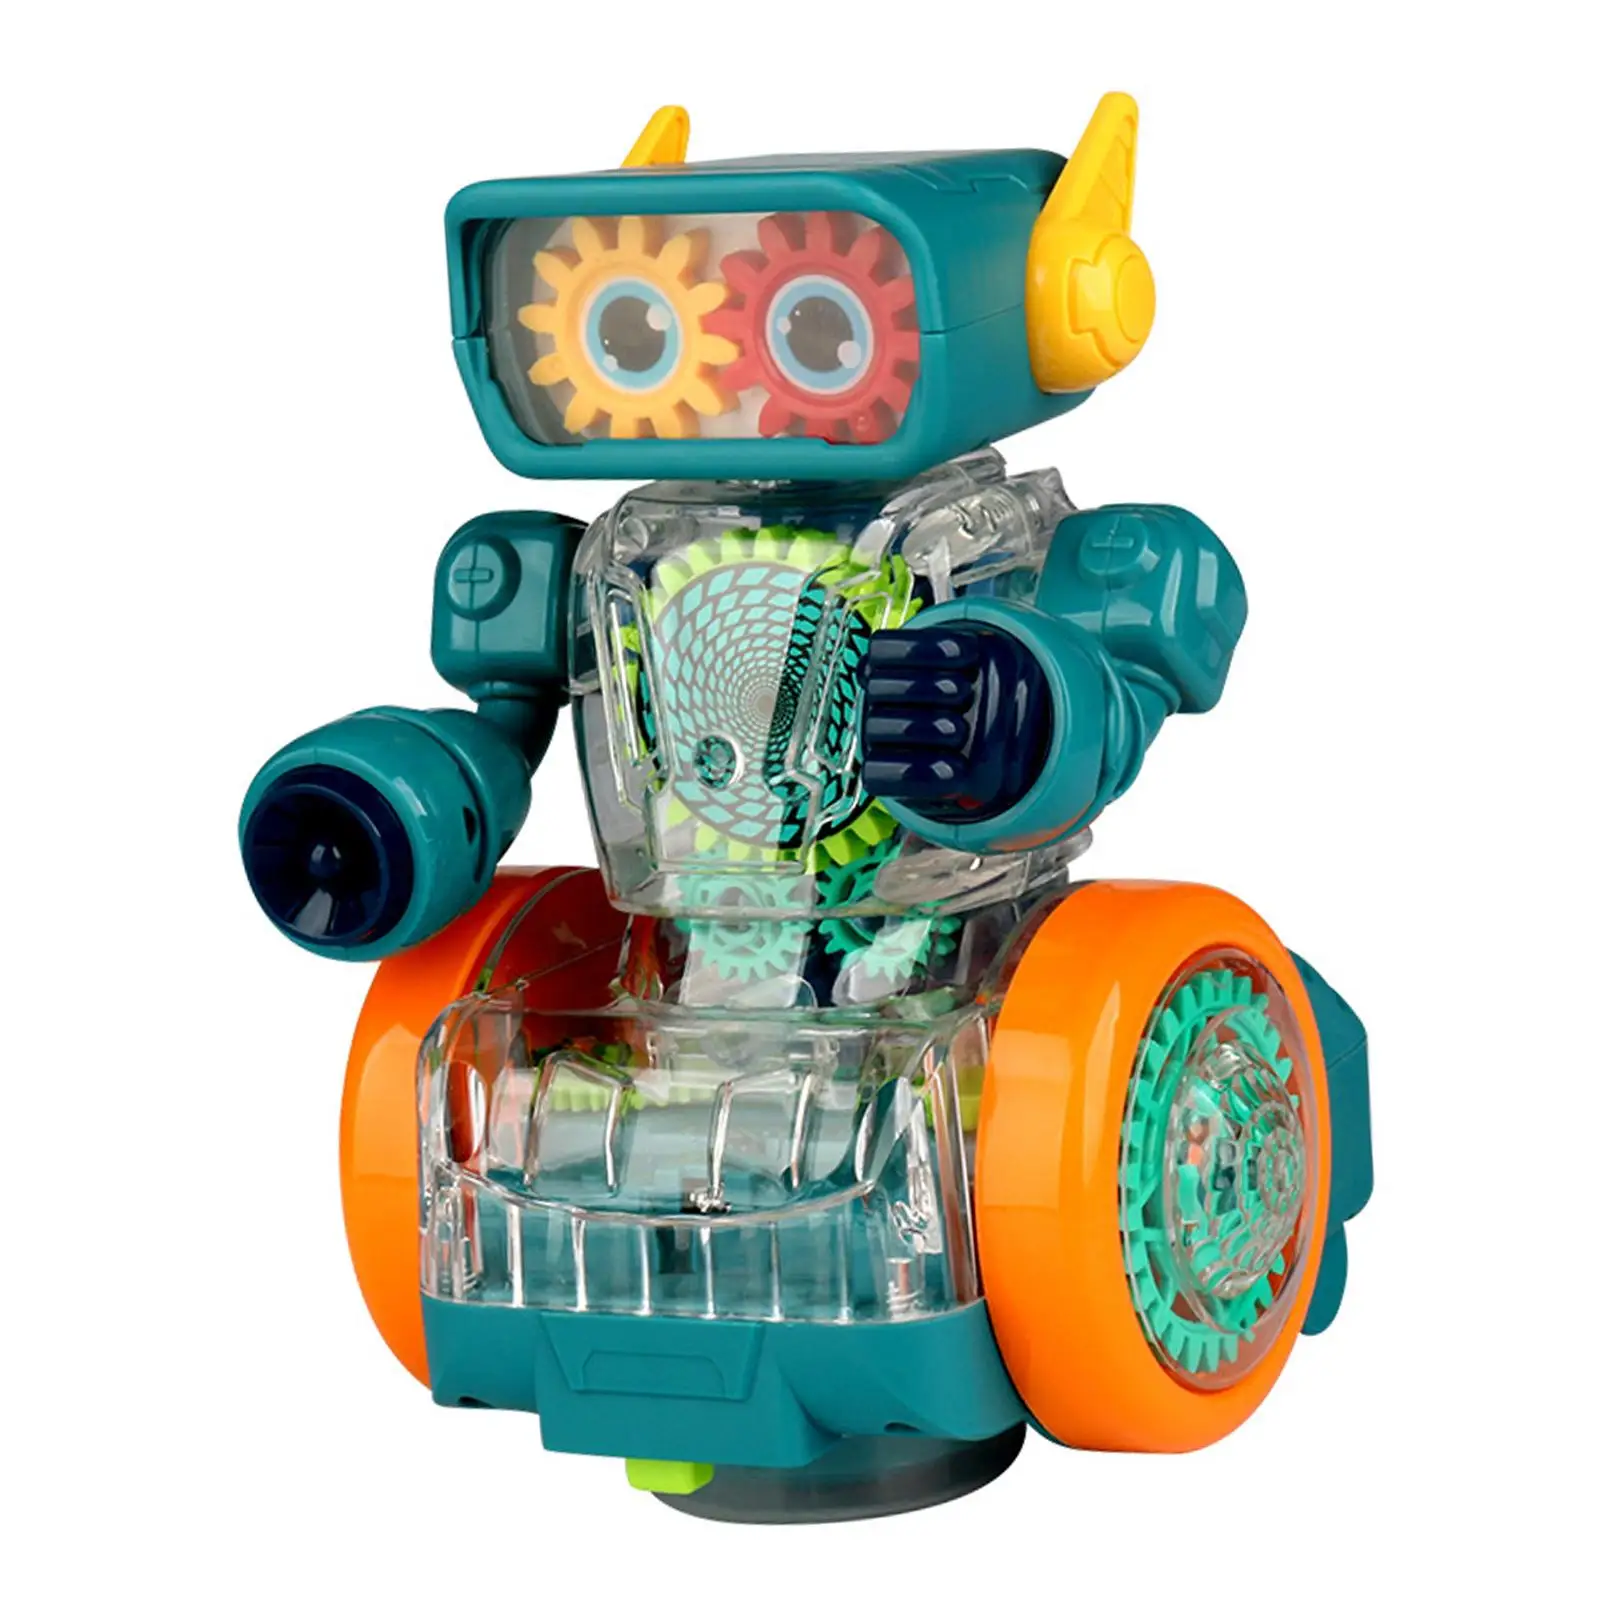 Mechanical Gear Robot Toy Developmental Toys for Children Birthday Gifts